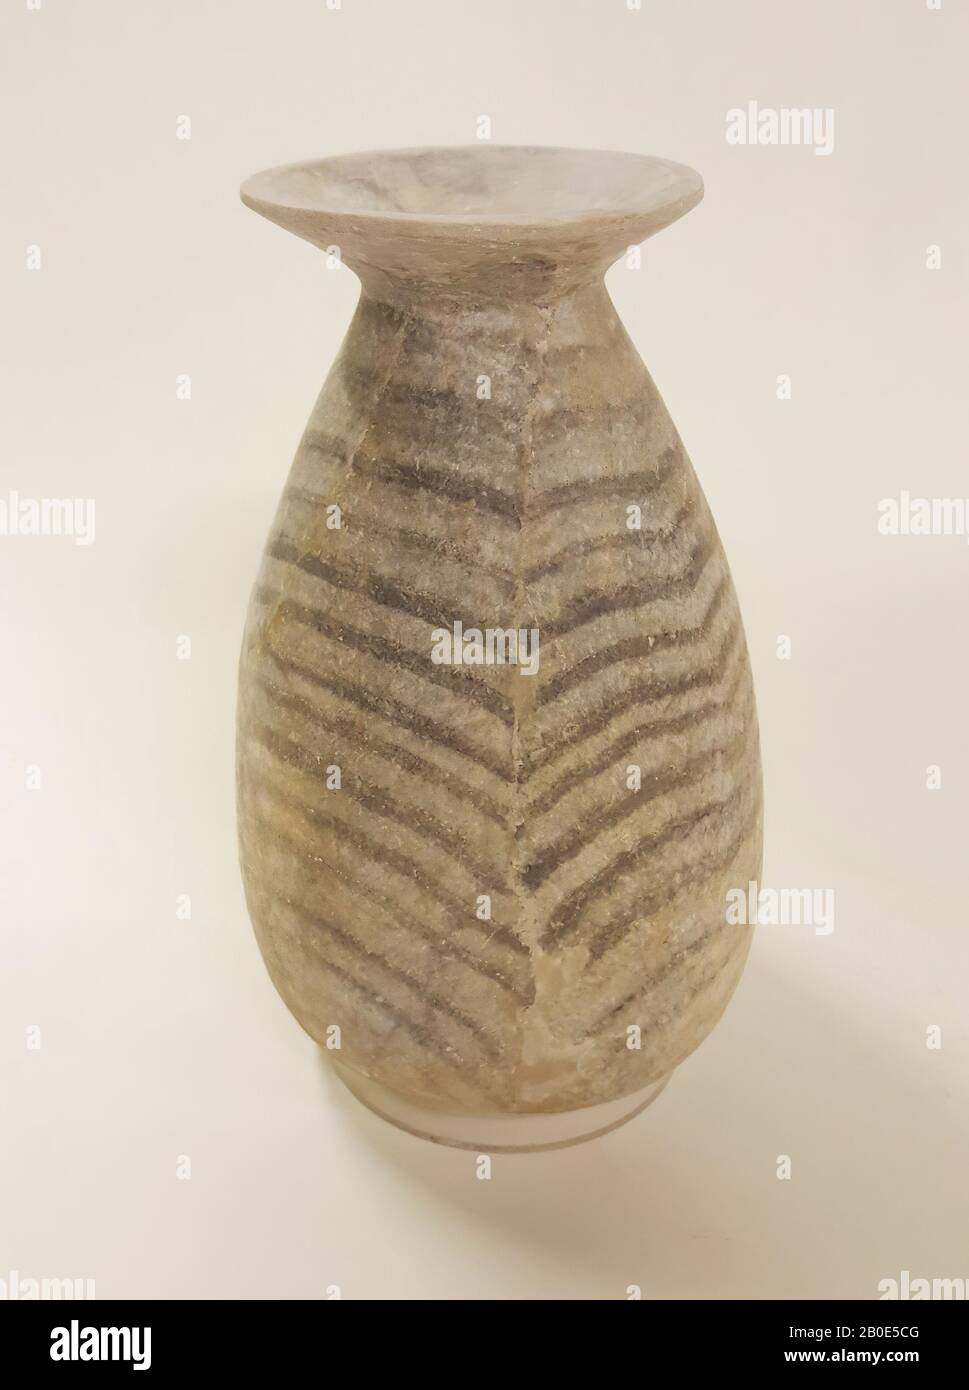 Alabaster jar hi-res stock photography and images - Alamy